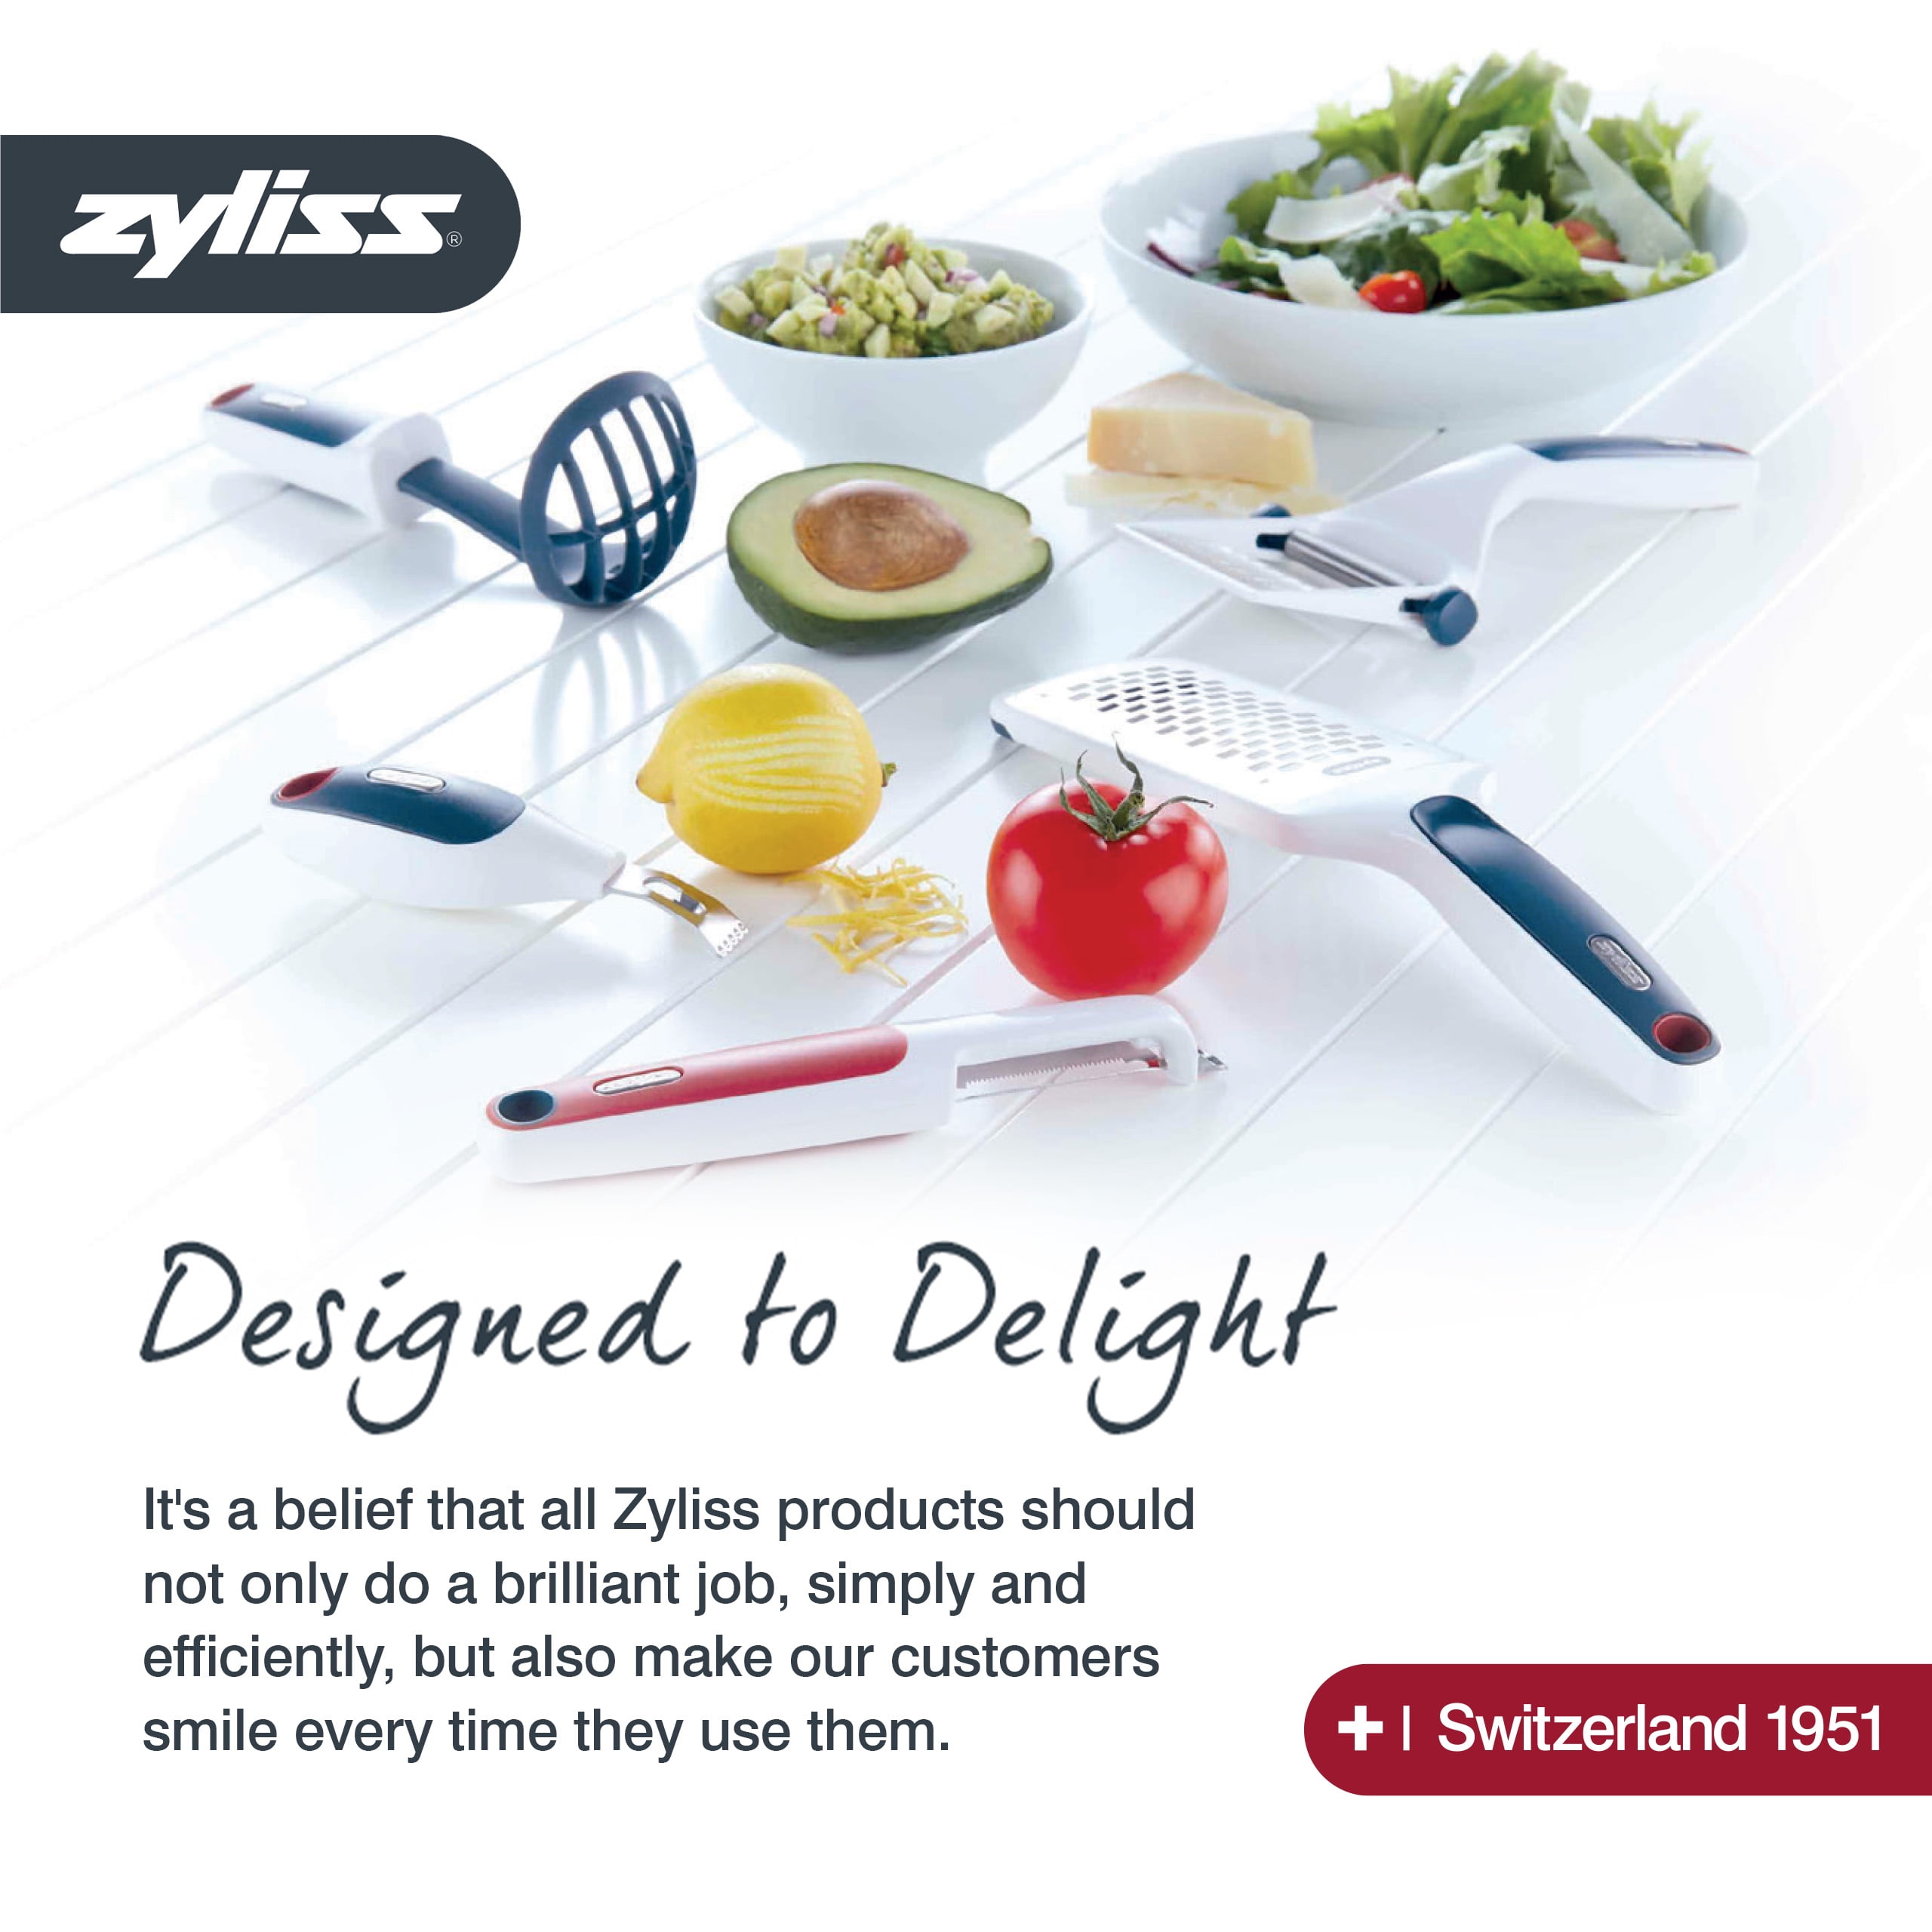 Zyliss Easy Pull Food Processor